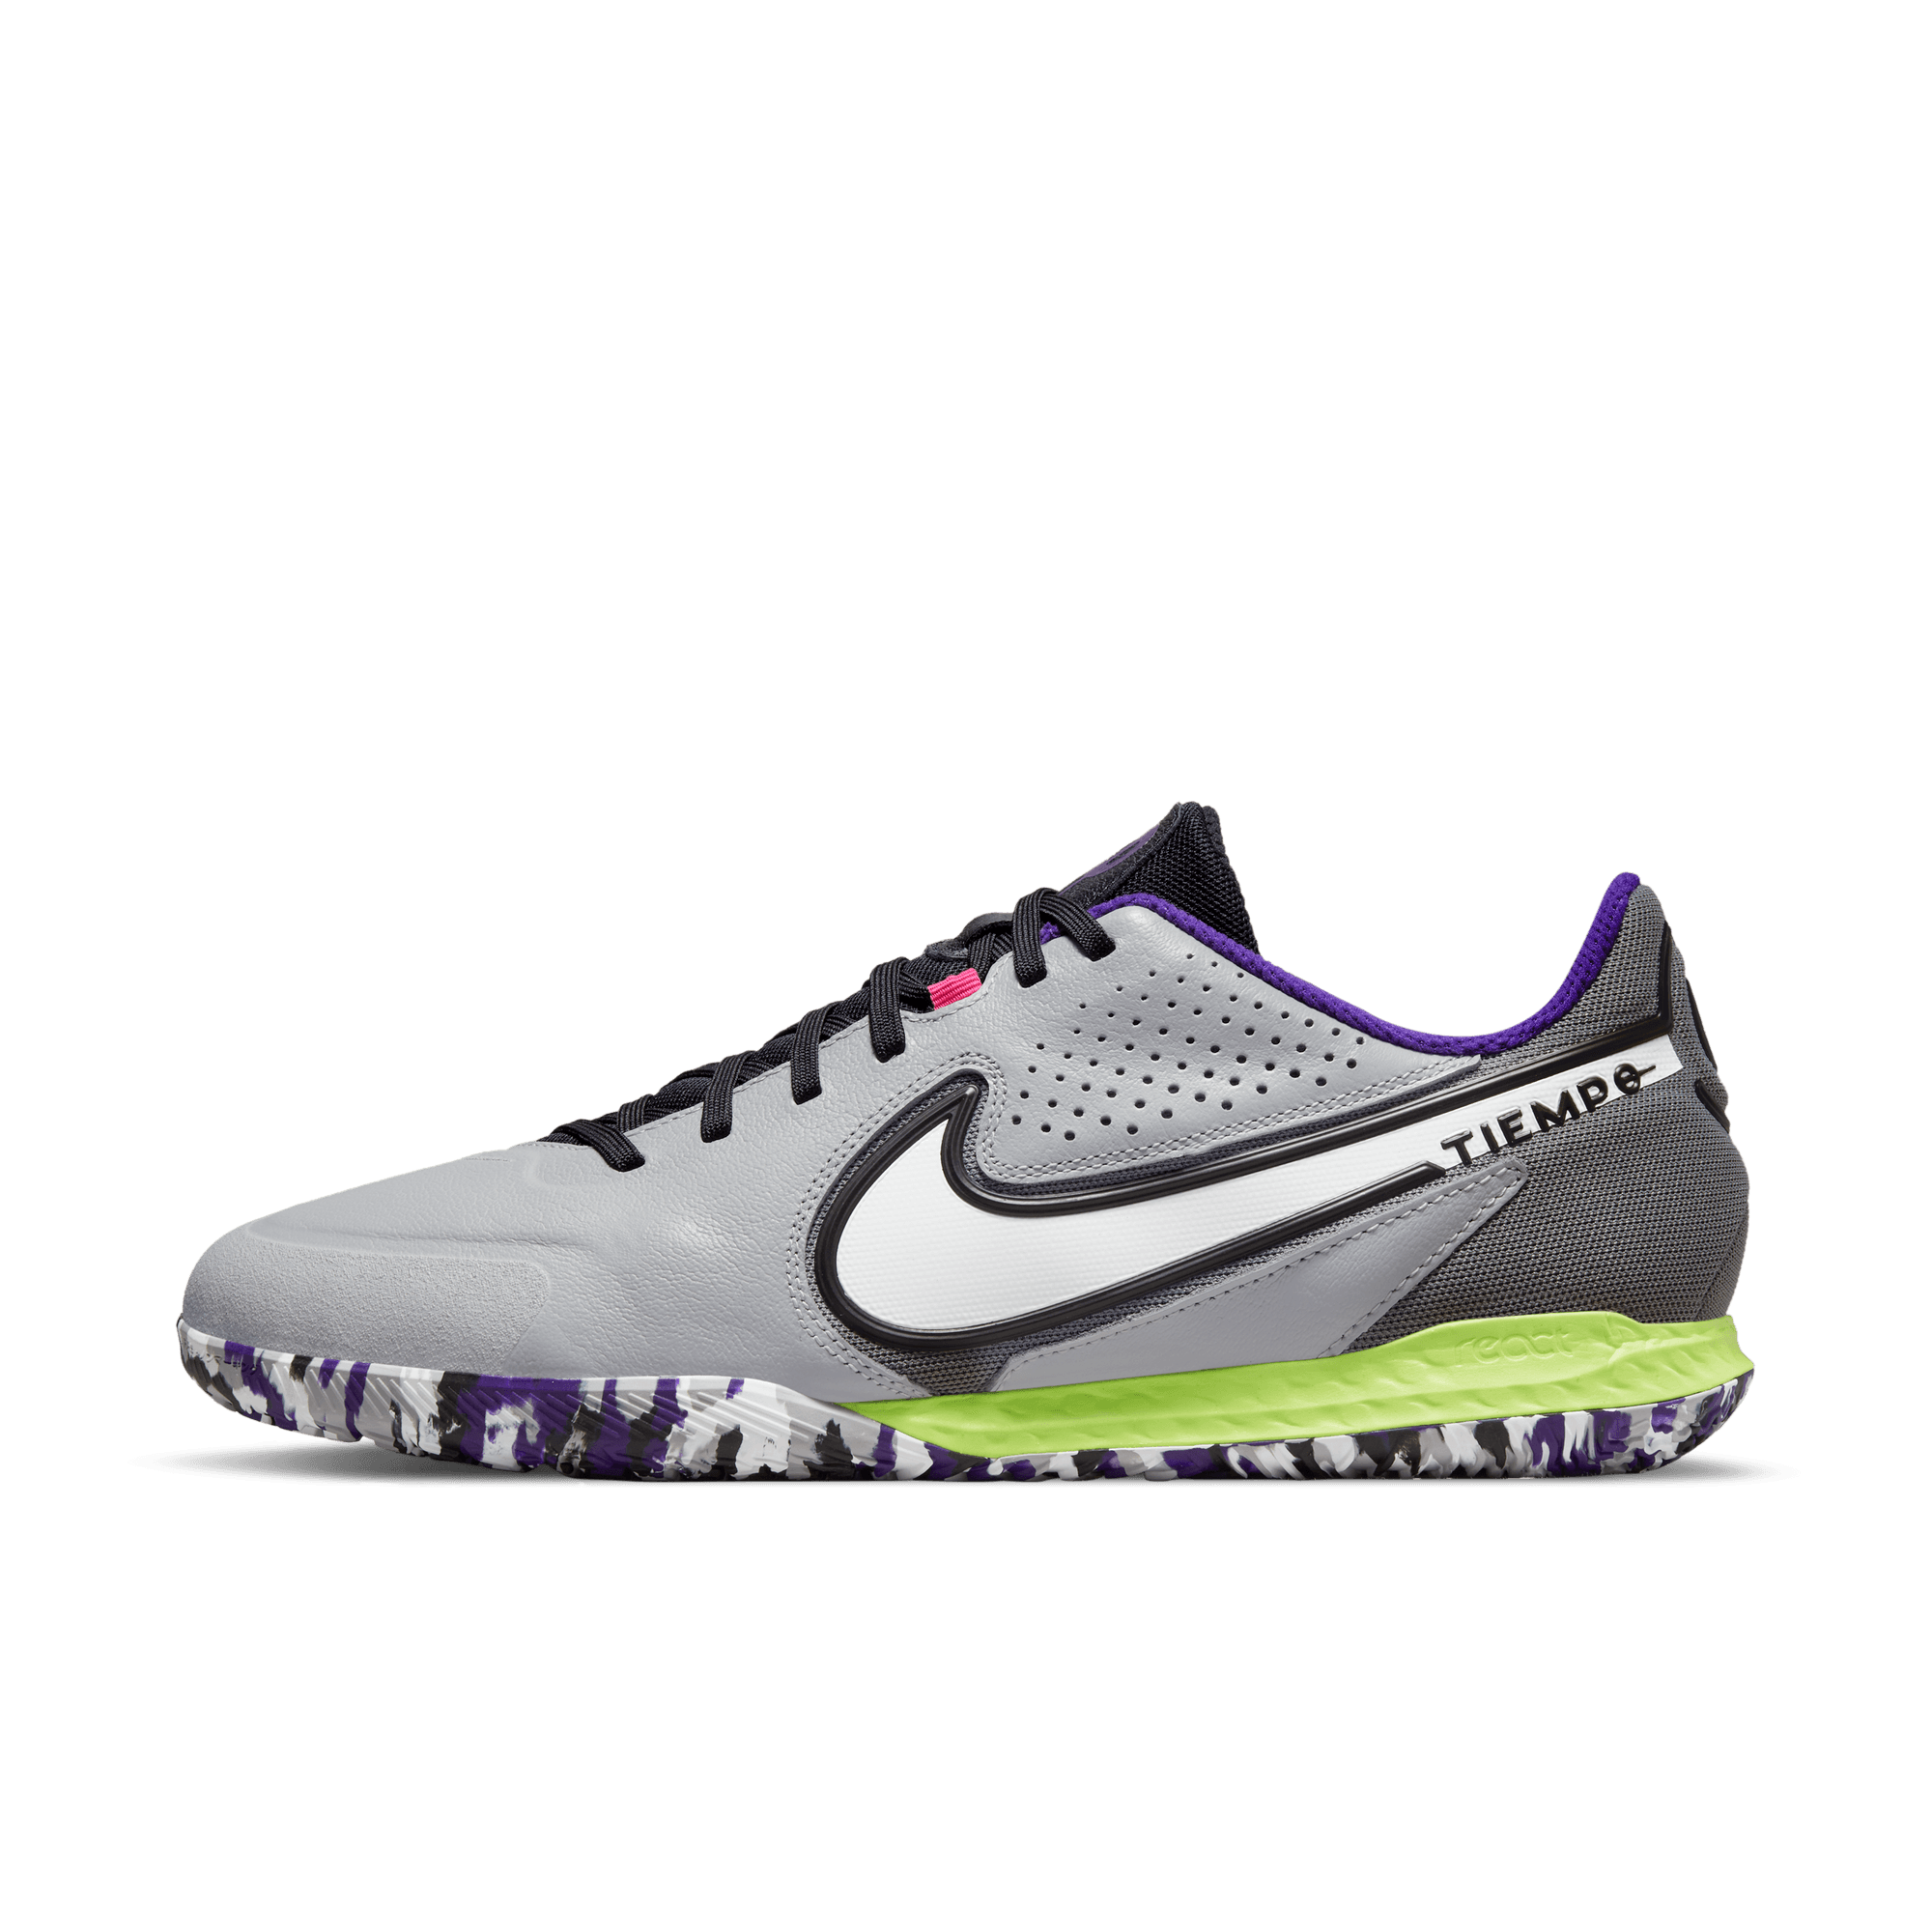 :Nike React Legend 9 Pro Indoor Soccer Shoes - Light Grey